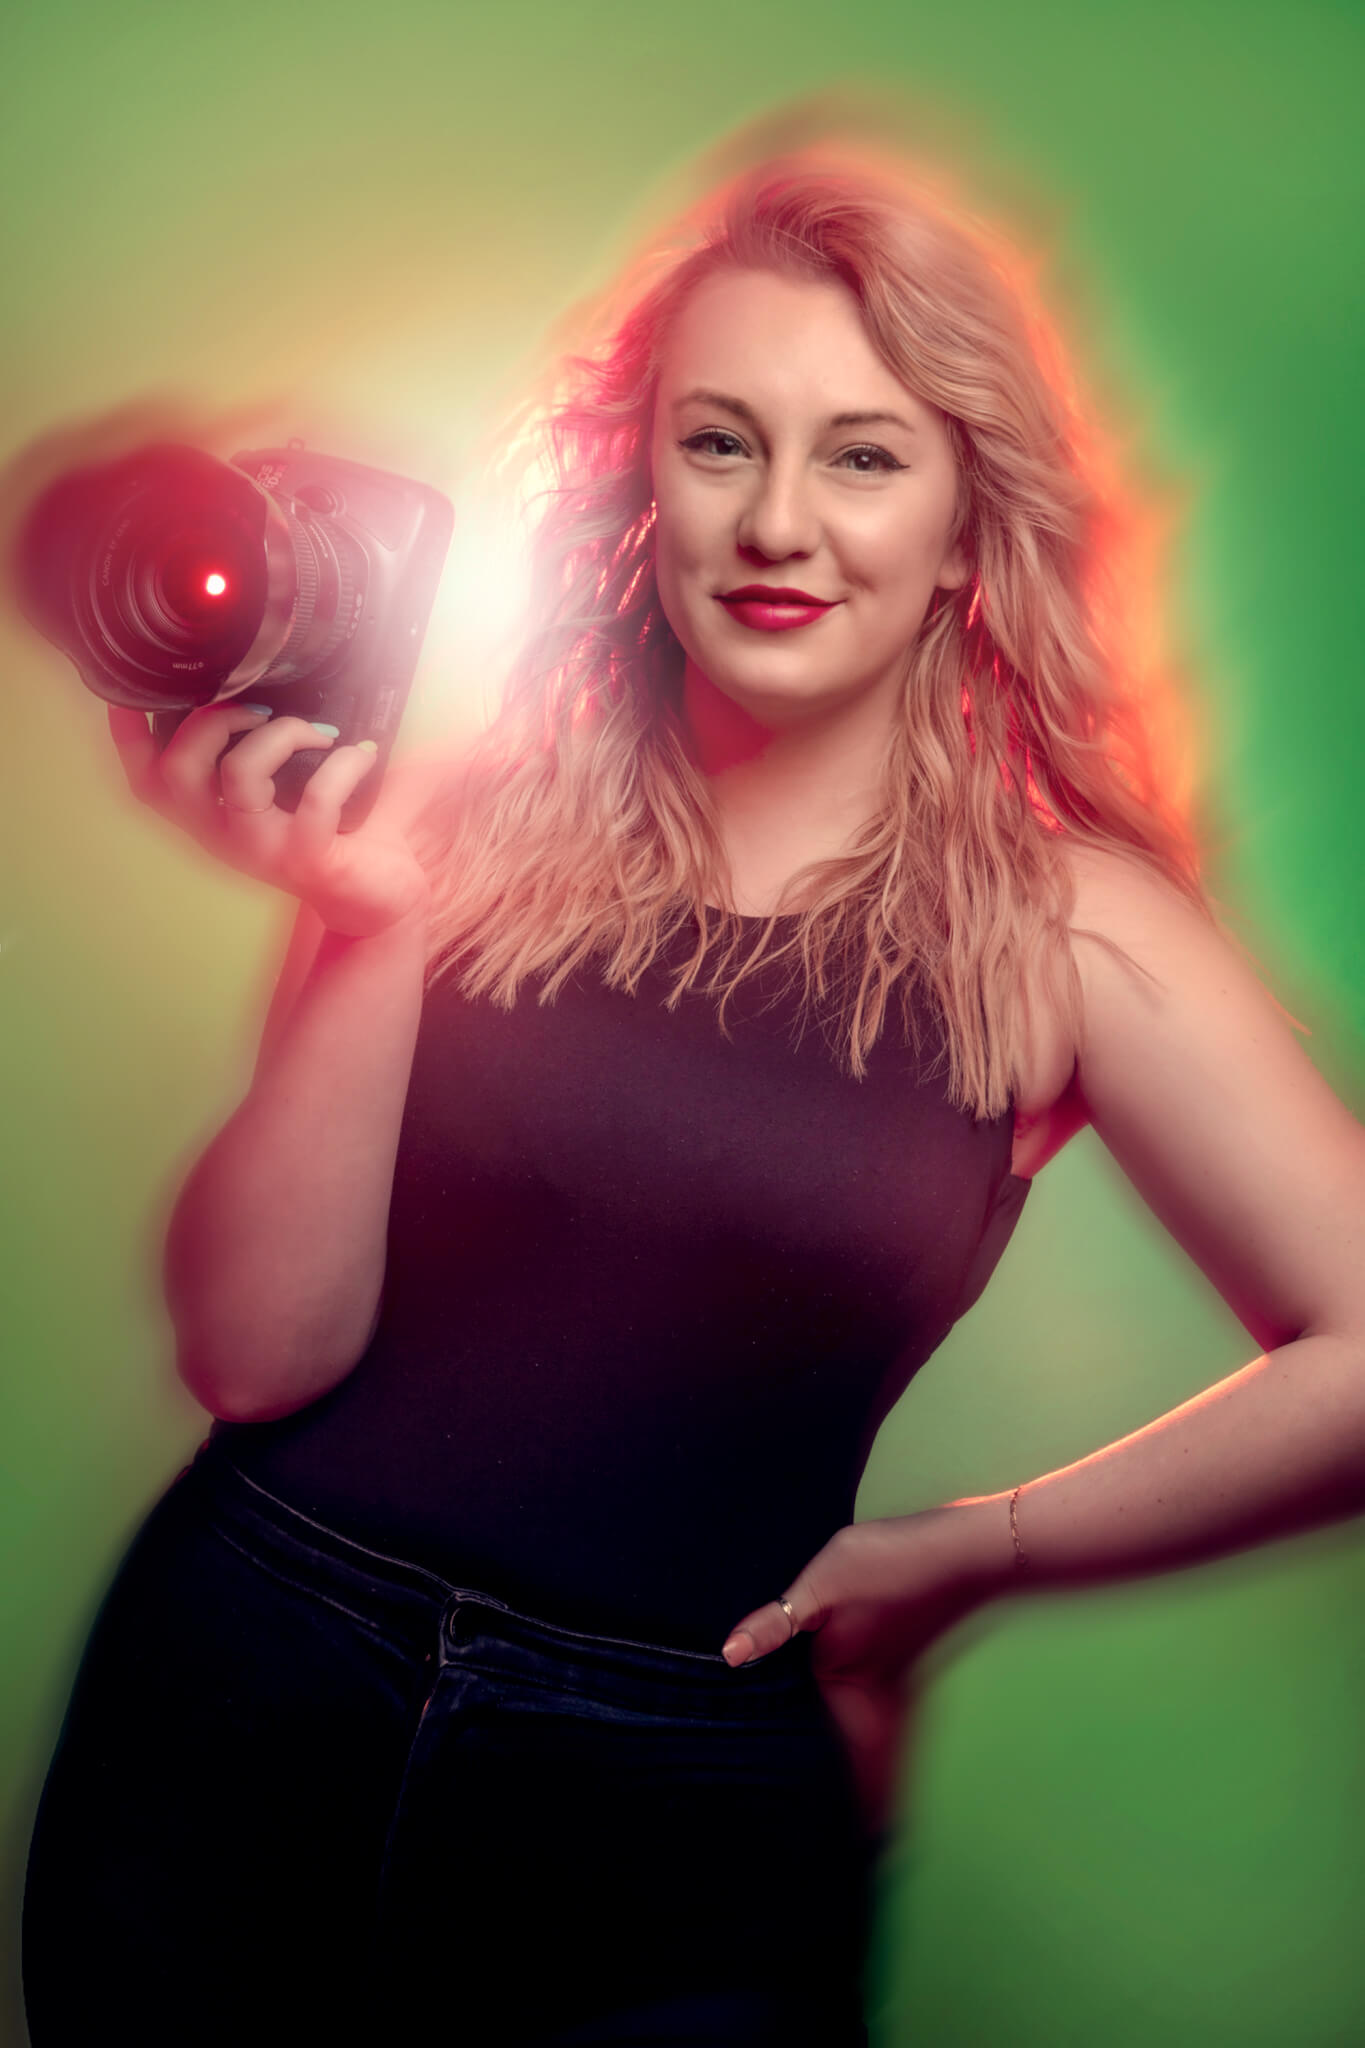 Venture photographer holding a camera